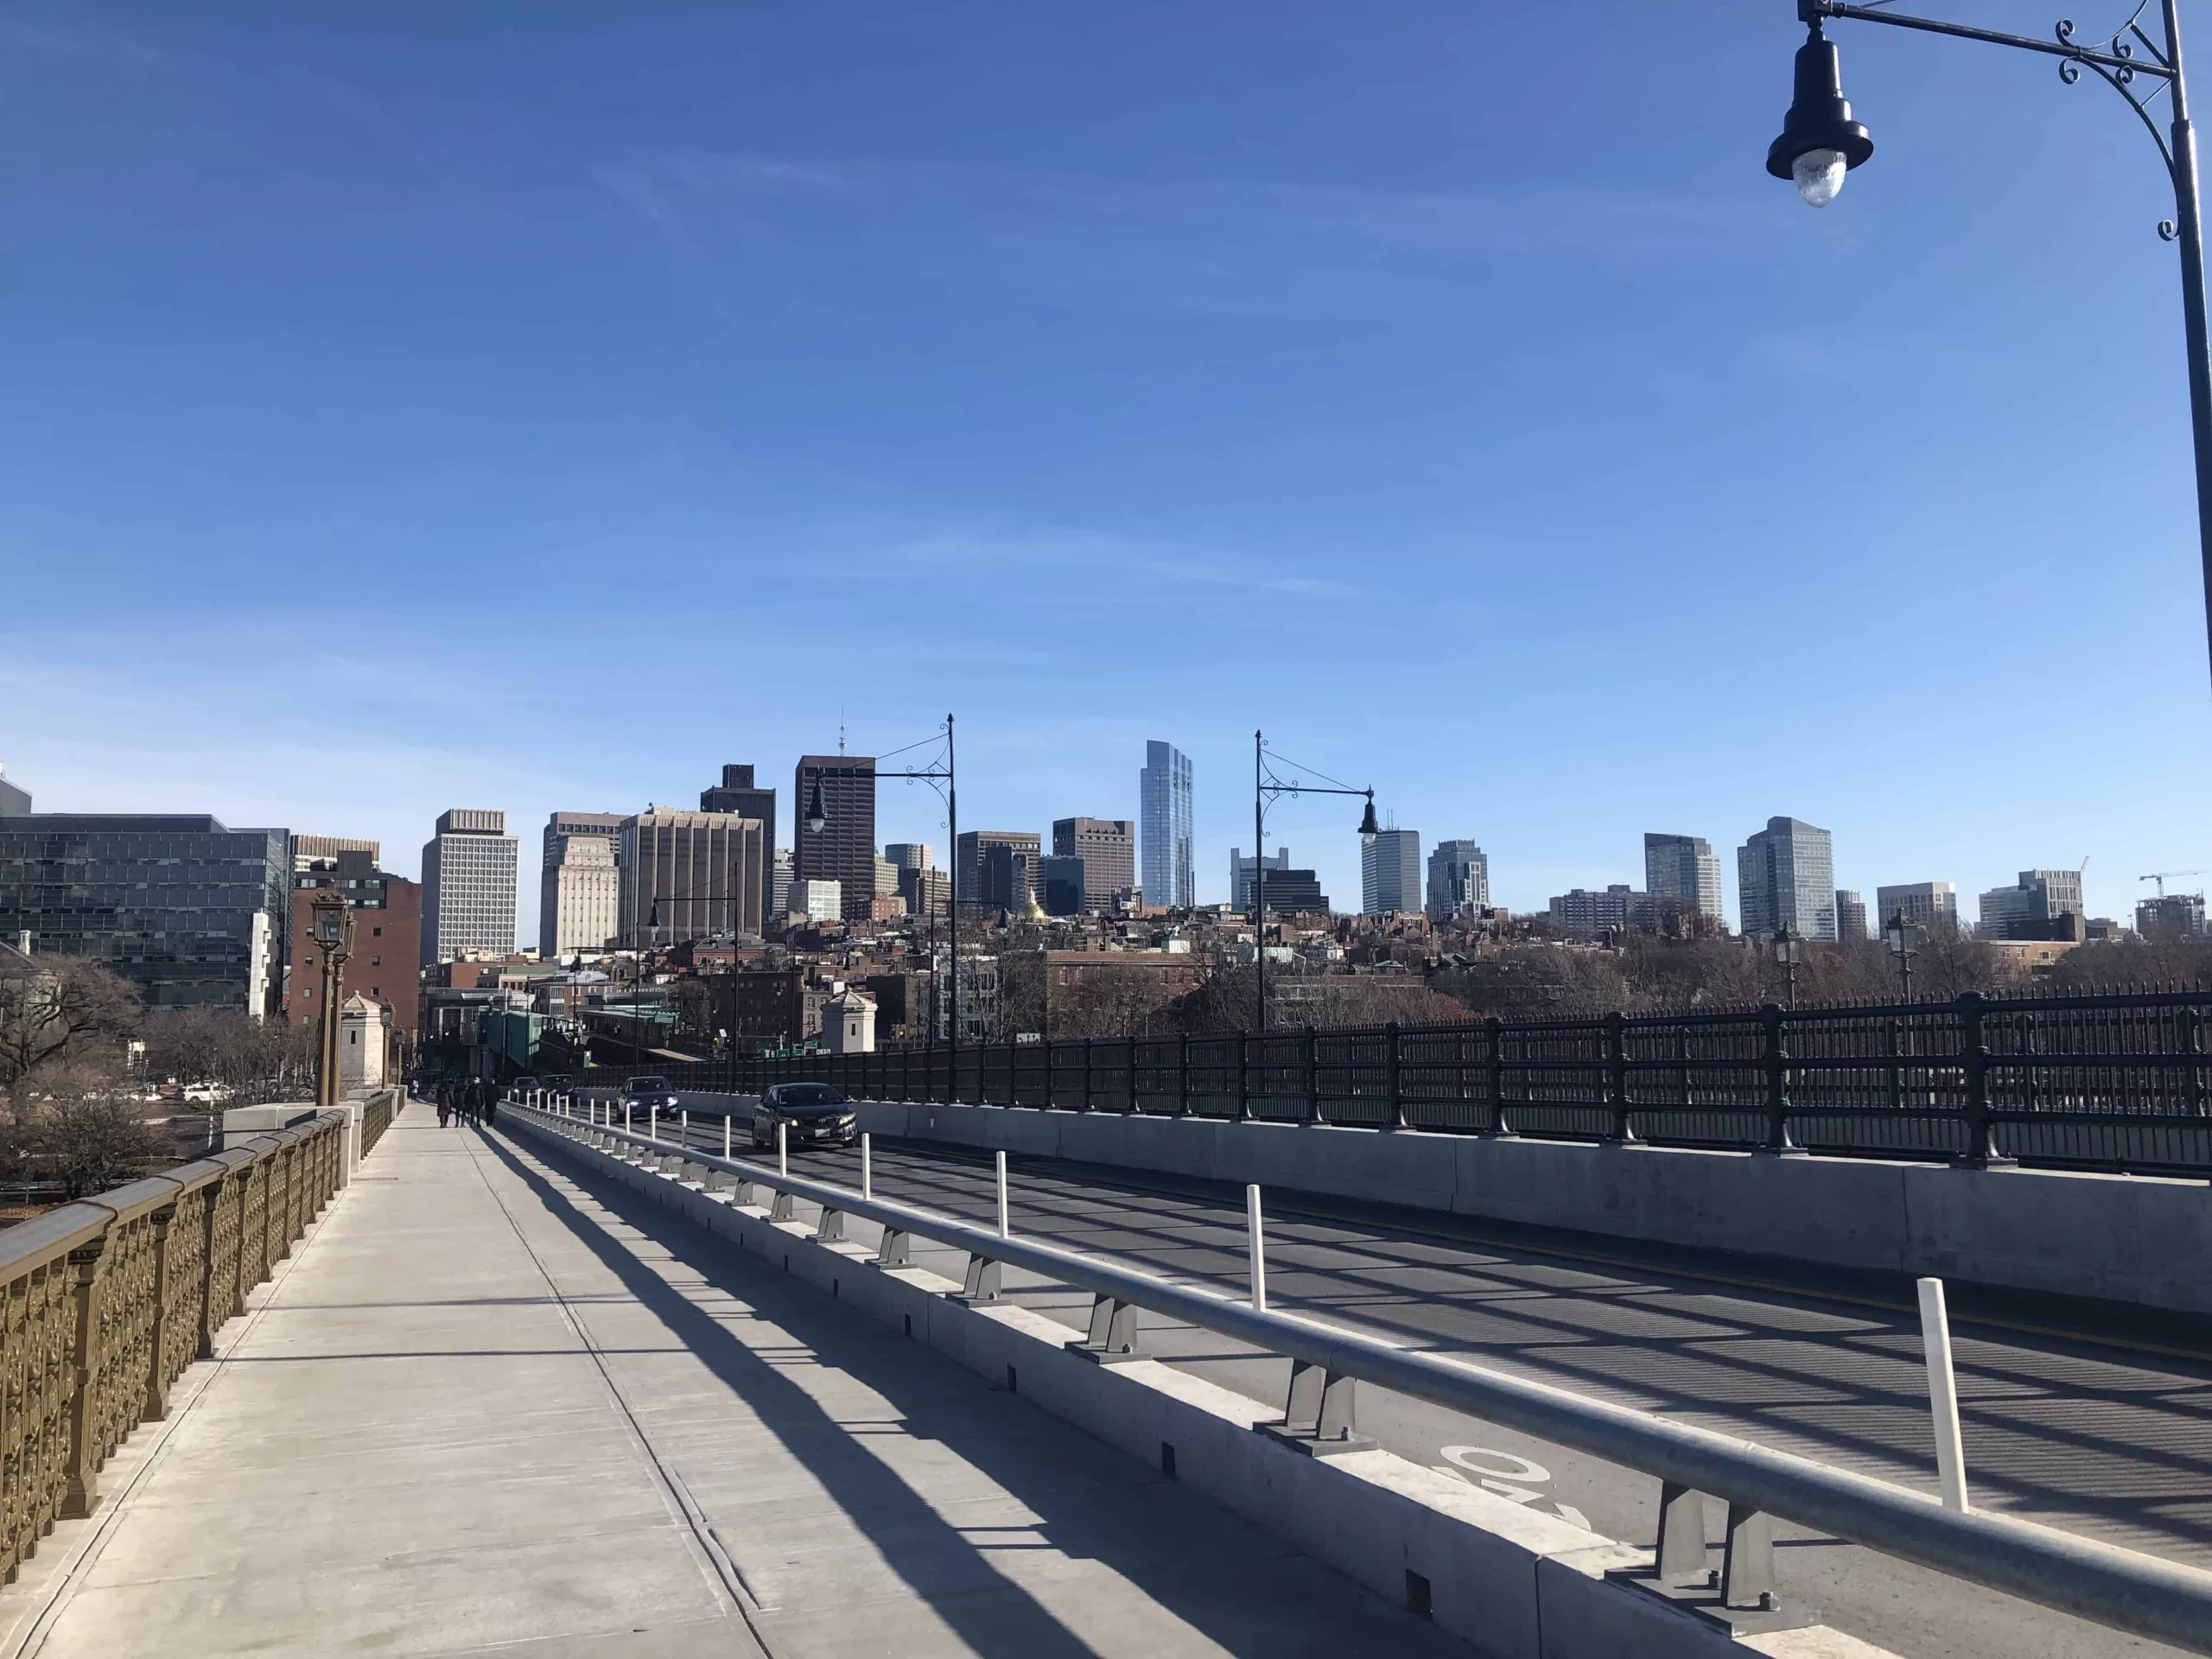 Boston as seen from the Longfellow Bridge